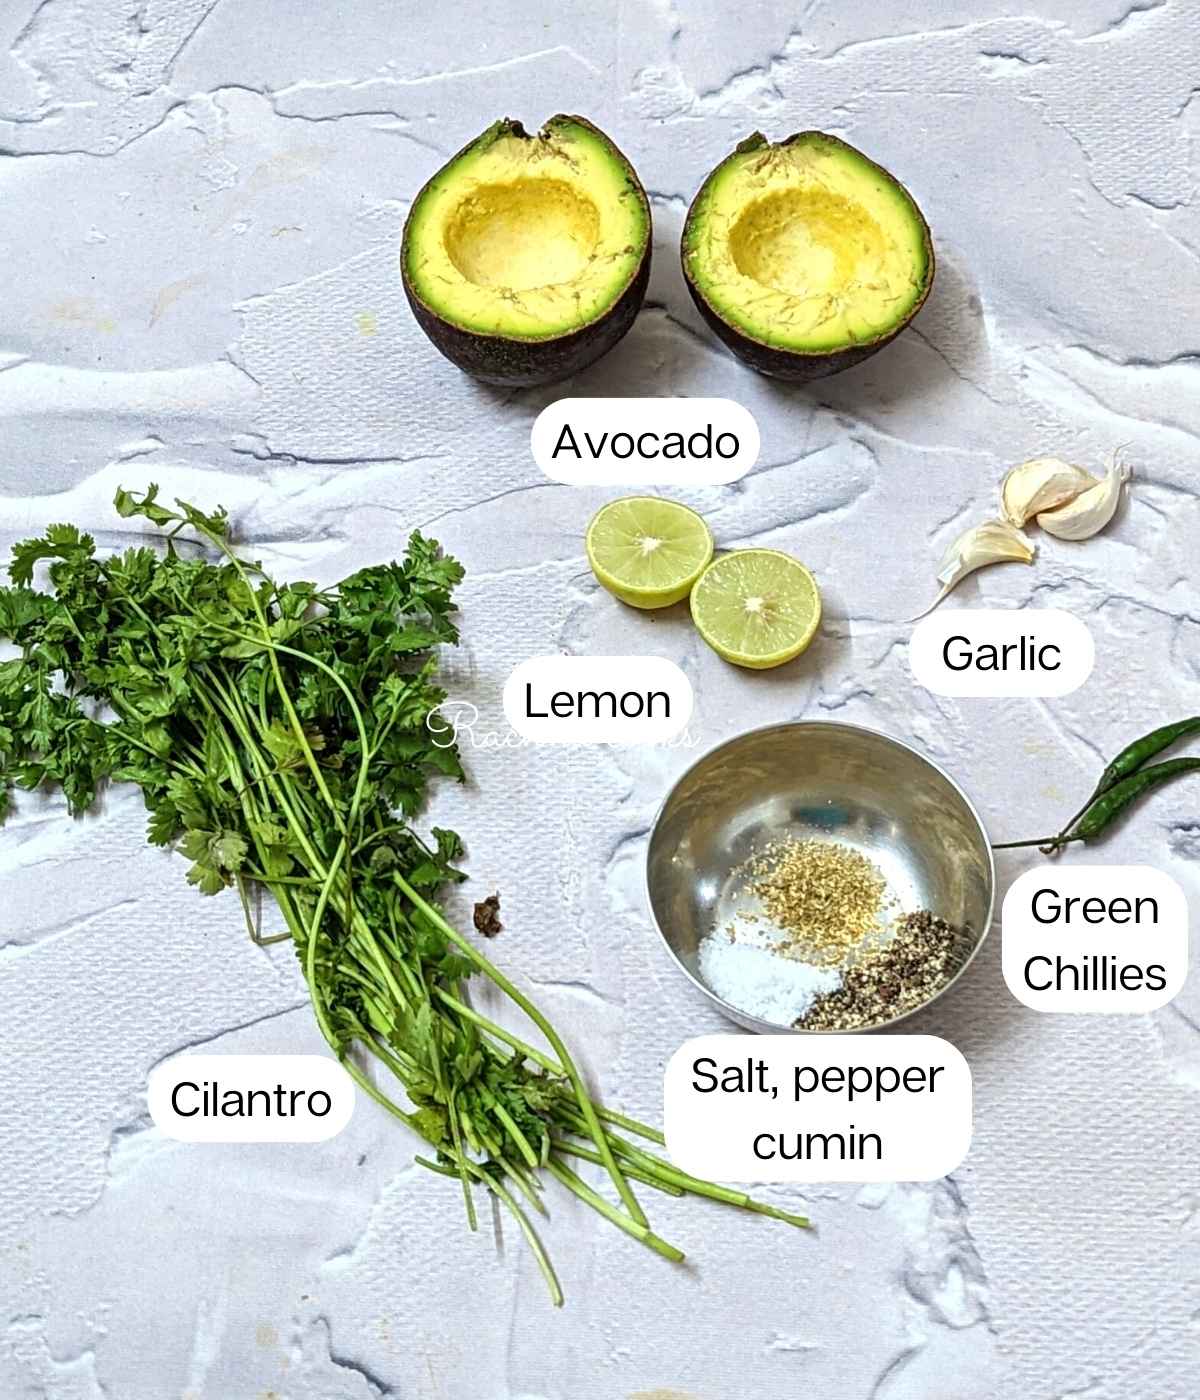 Ingredients for avocado chutney: cut avocado, cilantro, chillies, garlic, lemon salt and seasonings.